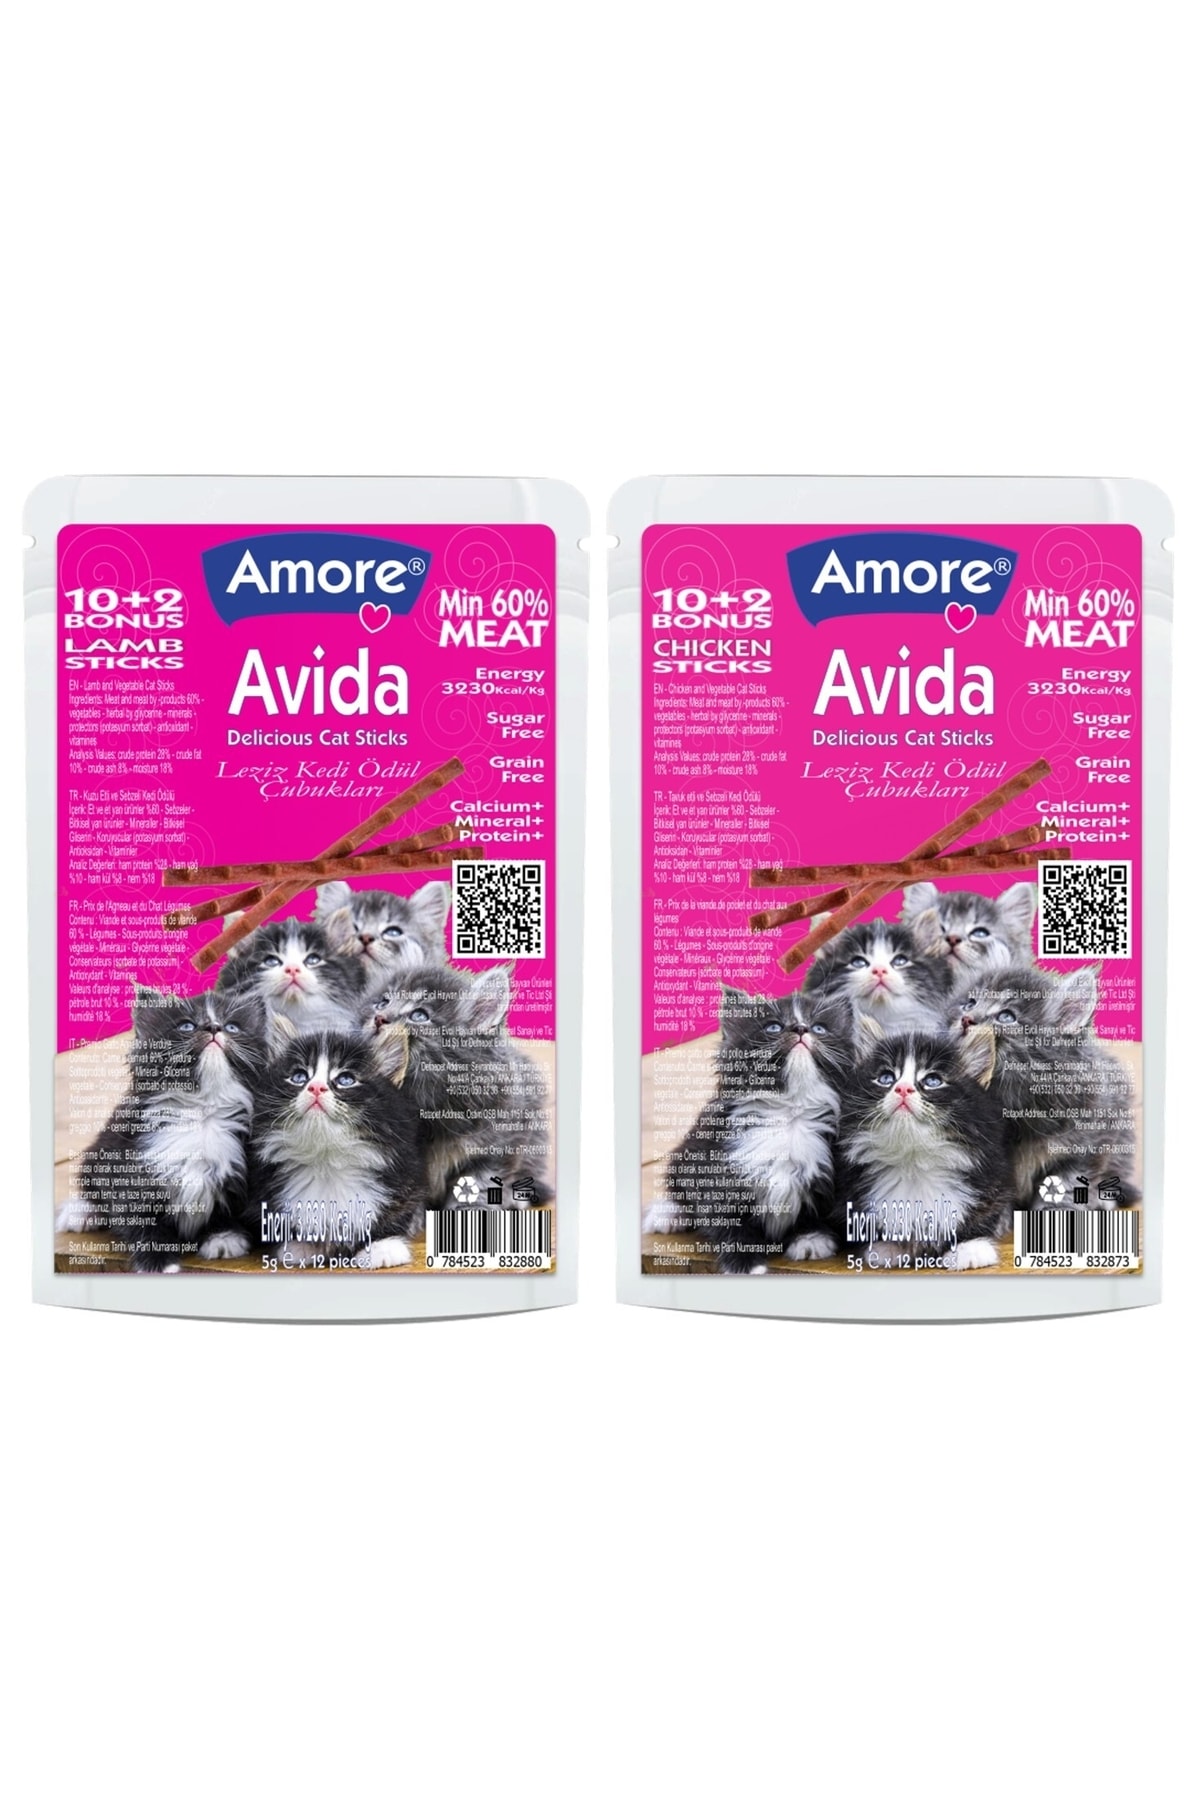 Amorecat Amore Avida Lamb-12 Ve Chicken-12 Cat Sticks Kuzulu Ve Tavuklu Tahilsiz Kedi Odul Cubuklari